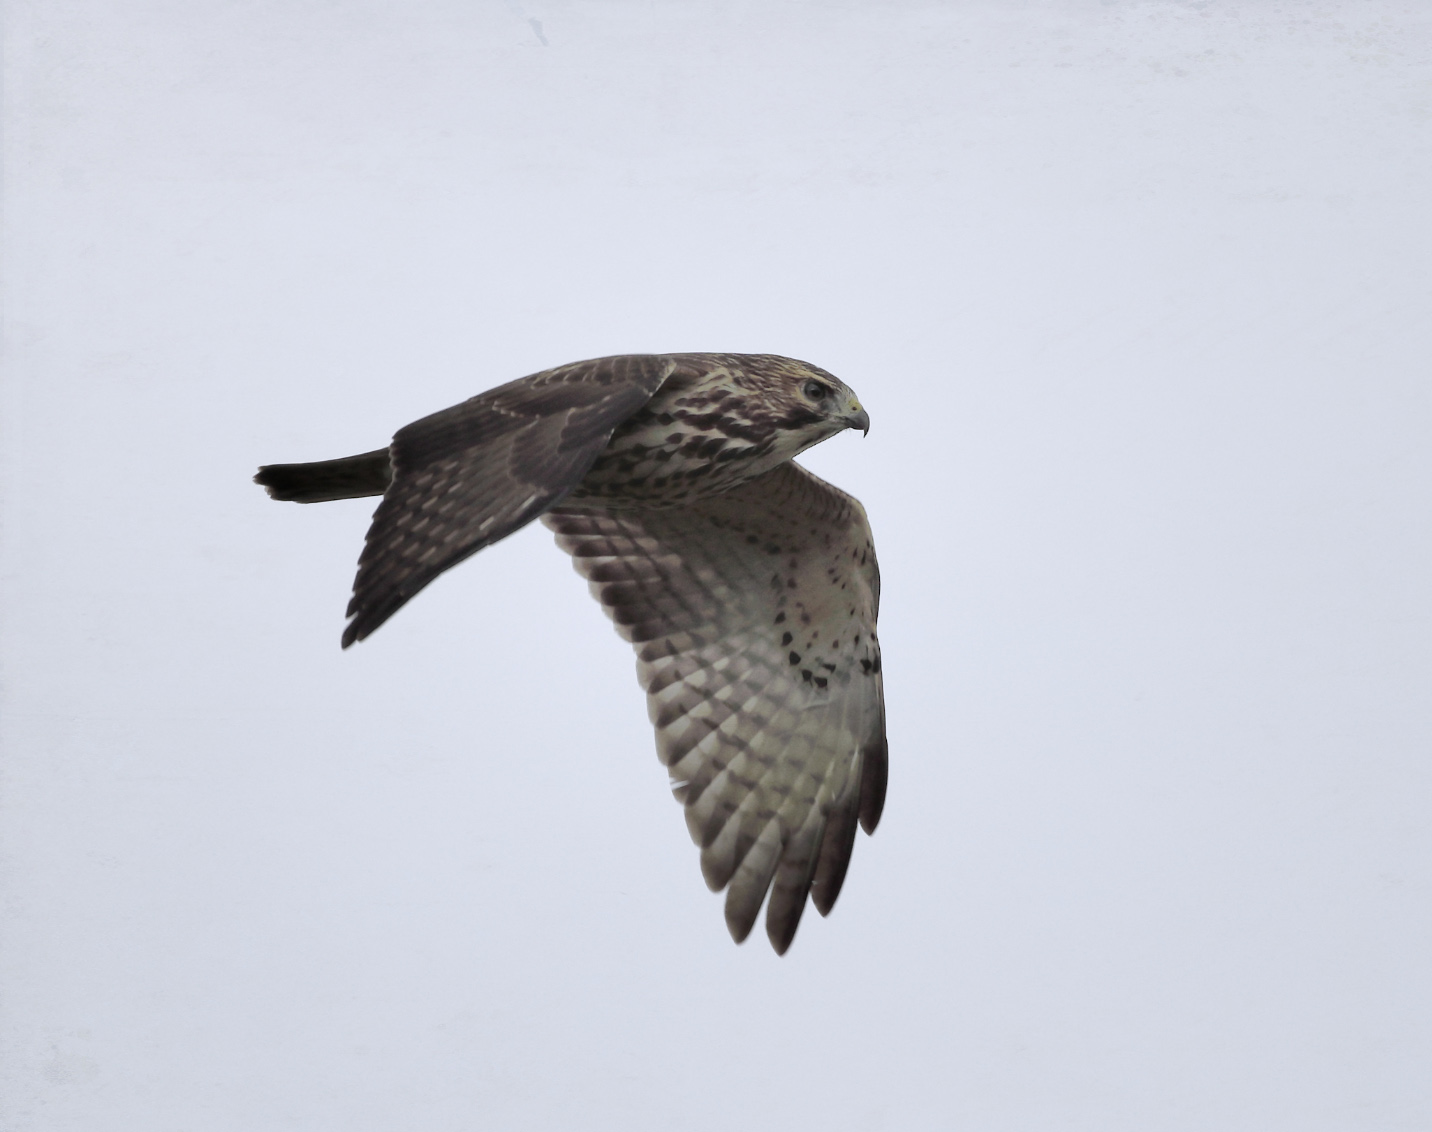 A Broad-winged Hawk in flight, its wings facing down. (photo © Andre Moraes / raven.digital)